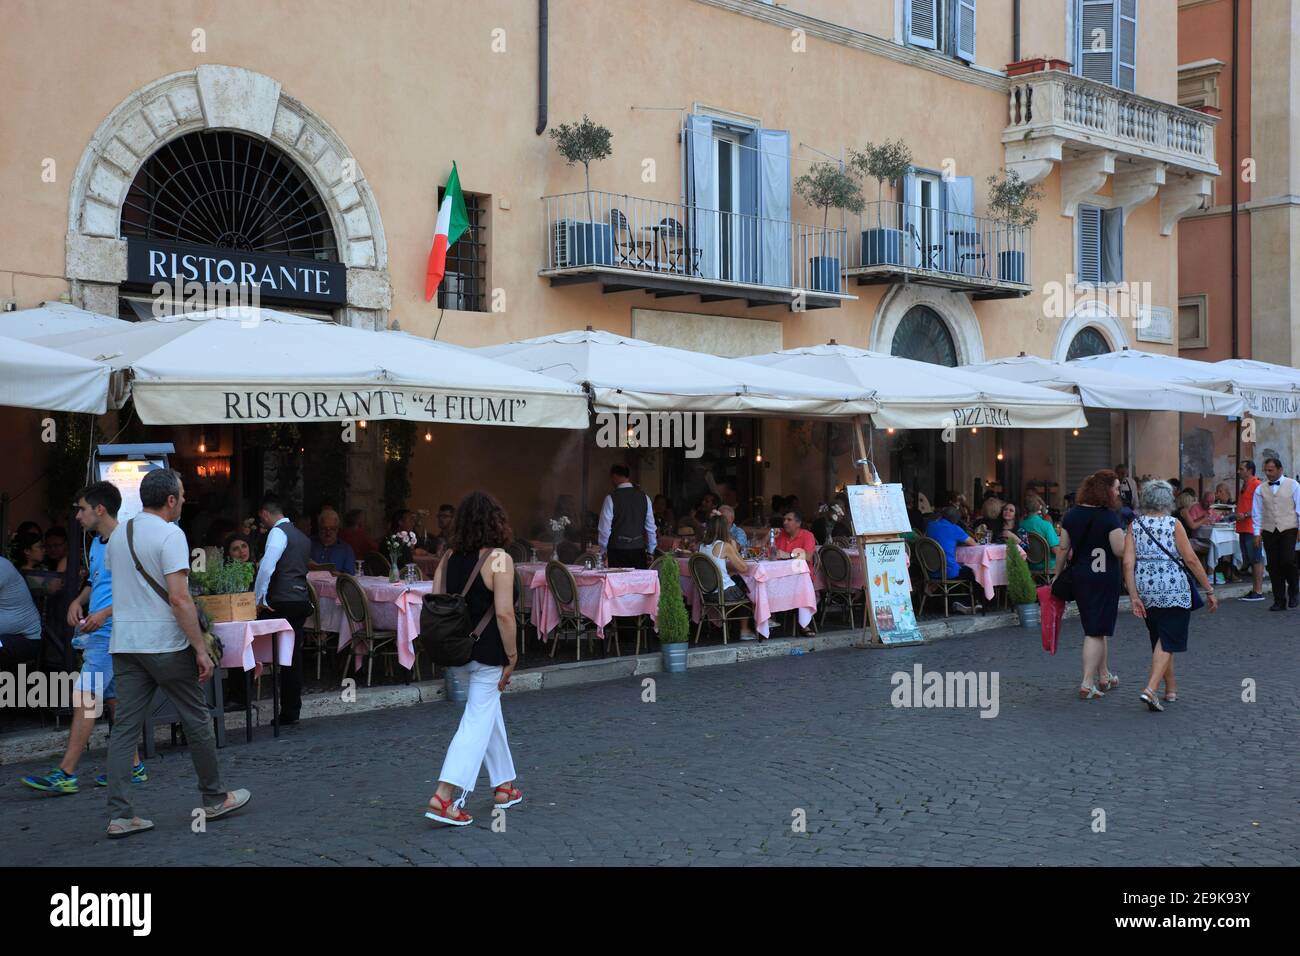 Caffè di strada nel centro storico di Roma, Italia / Straßenkaffee in der Altstadt von Rom, Italien Foto Stock